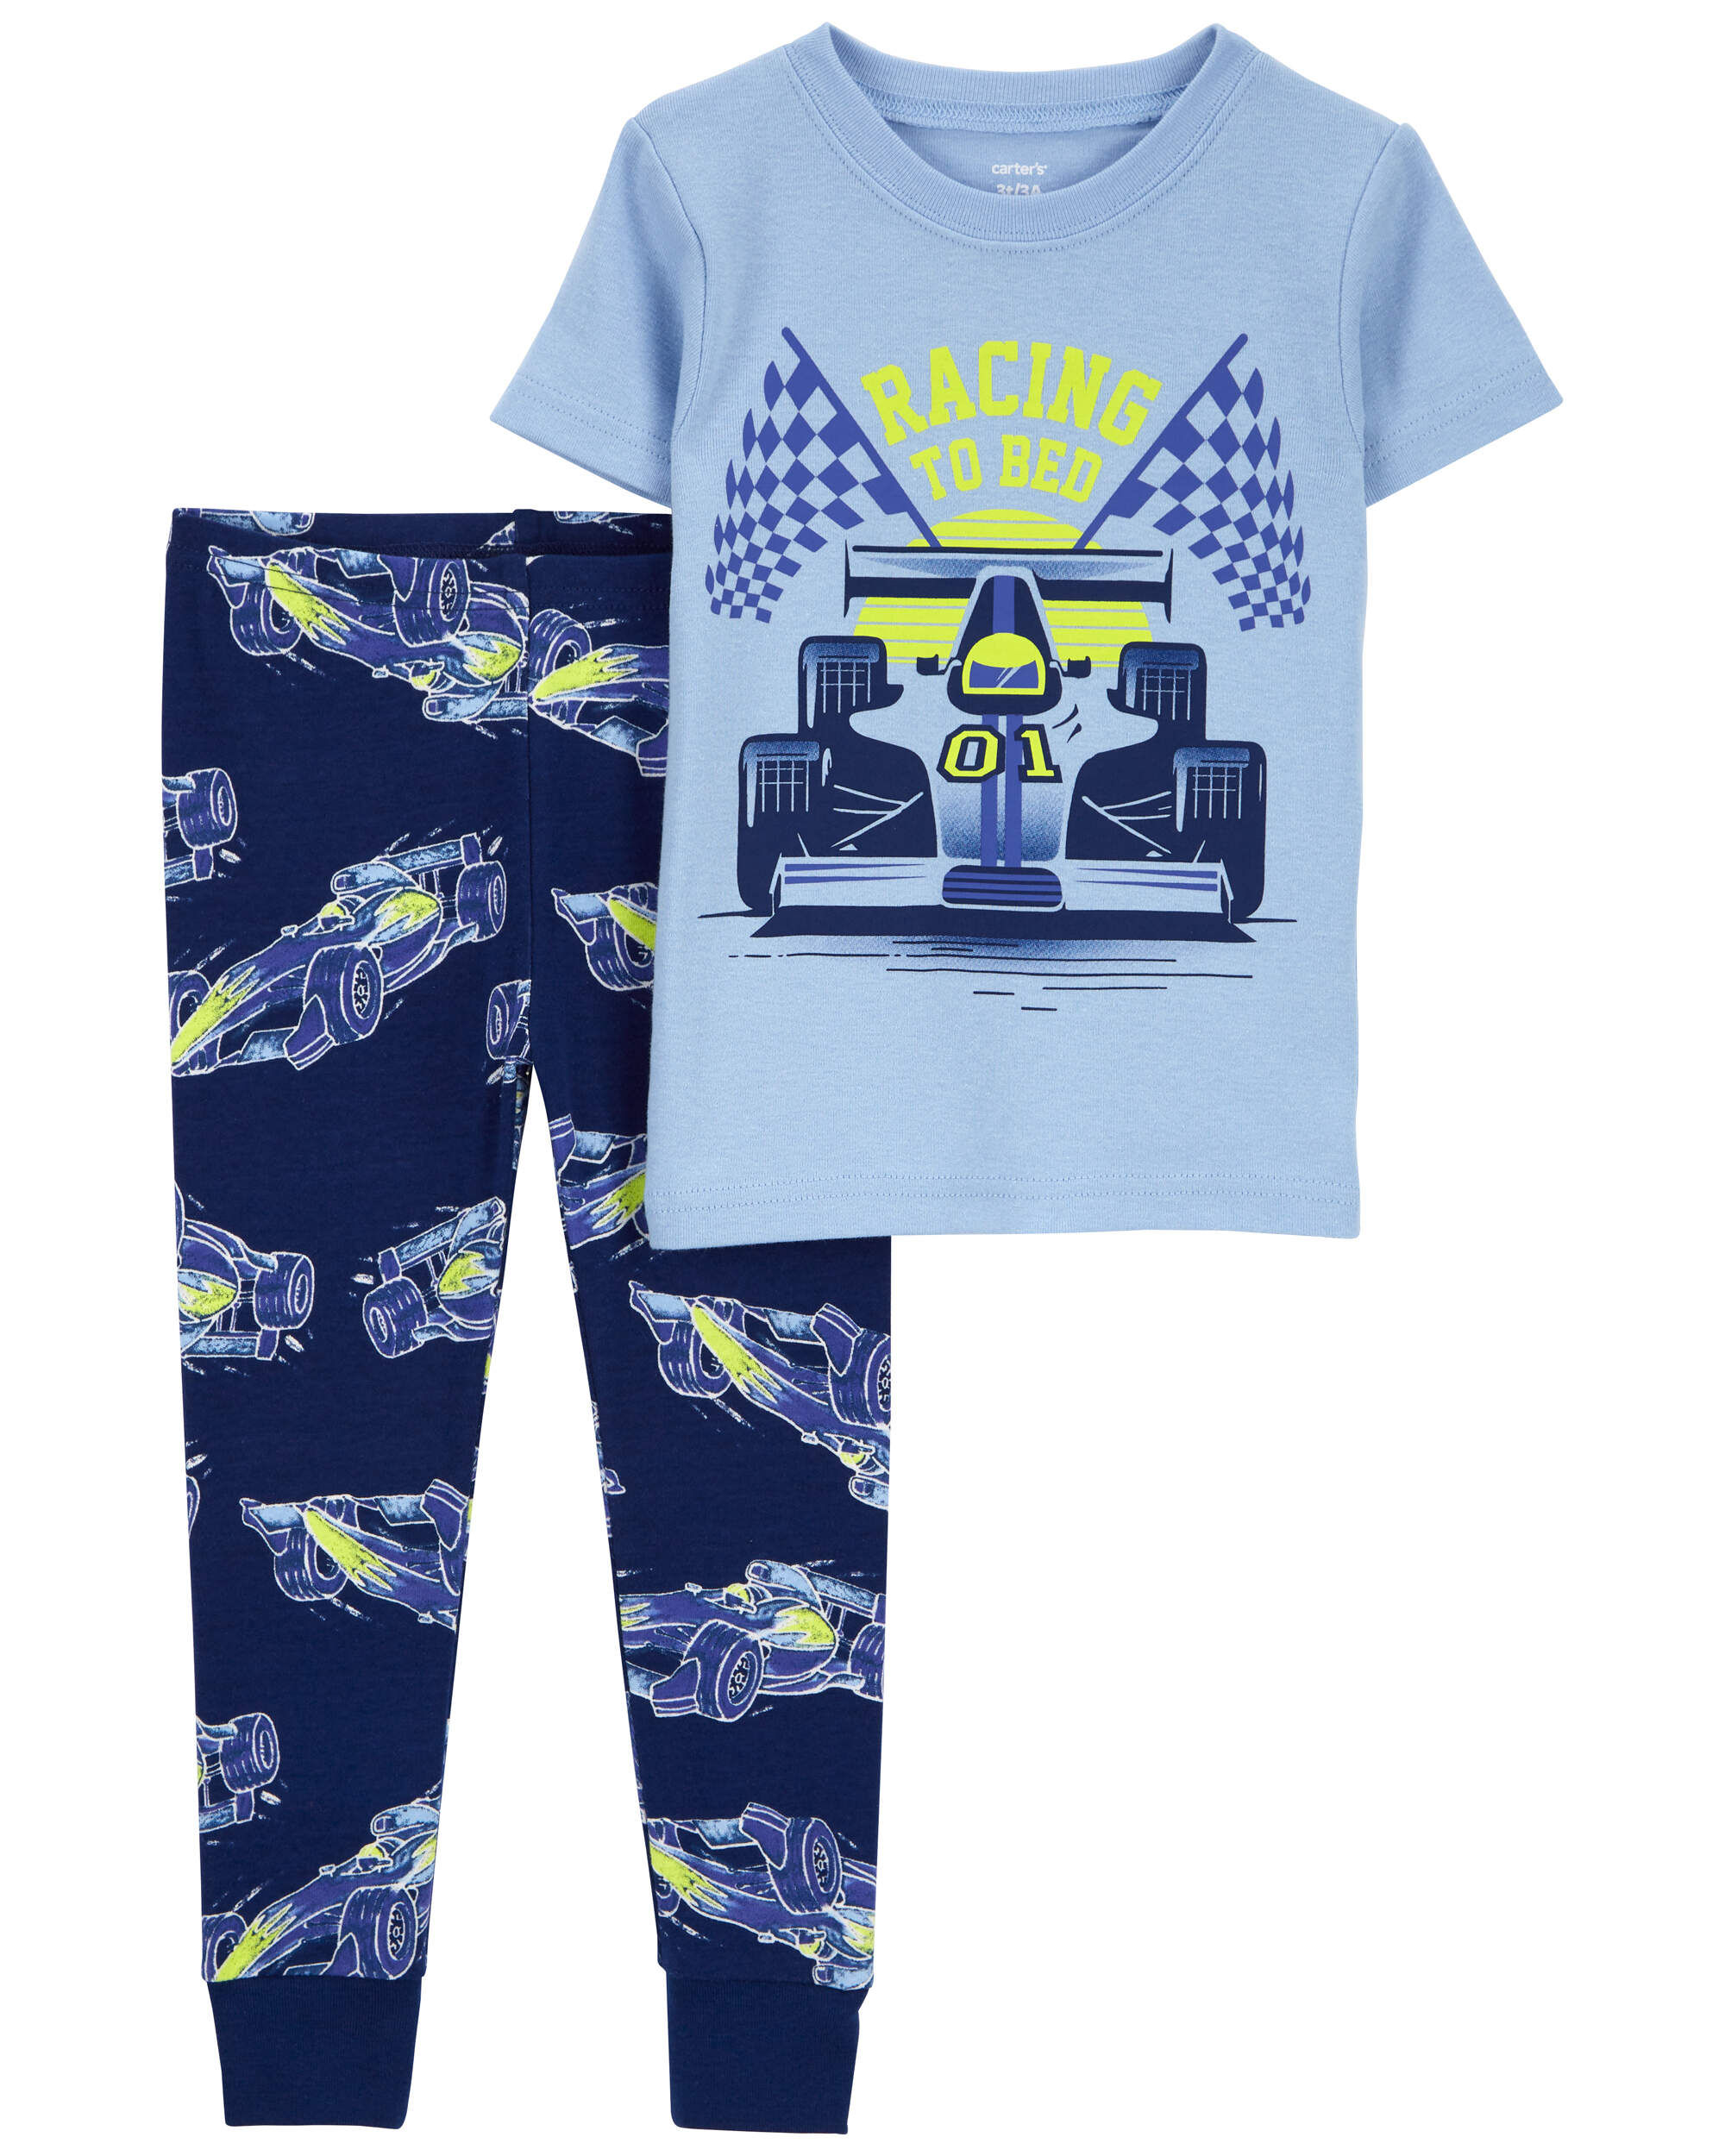 Baby 2-Piece Racing 100% Snug Fit Cotton Pyjamas